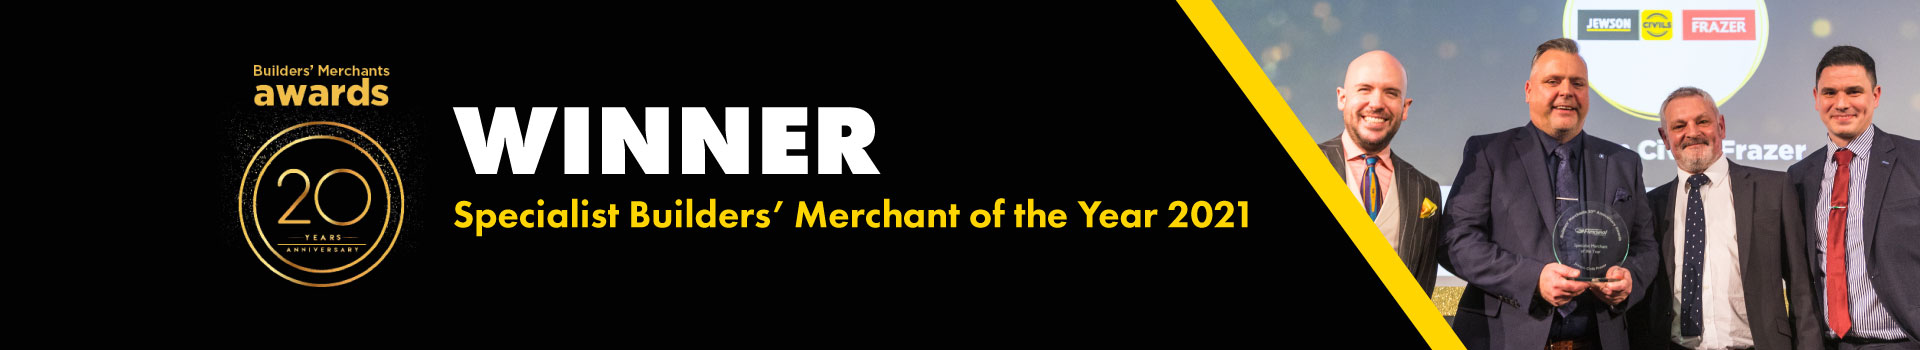 Specialist Builders' Merchant of the Year 2021 - Winner